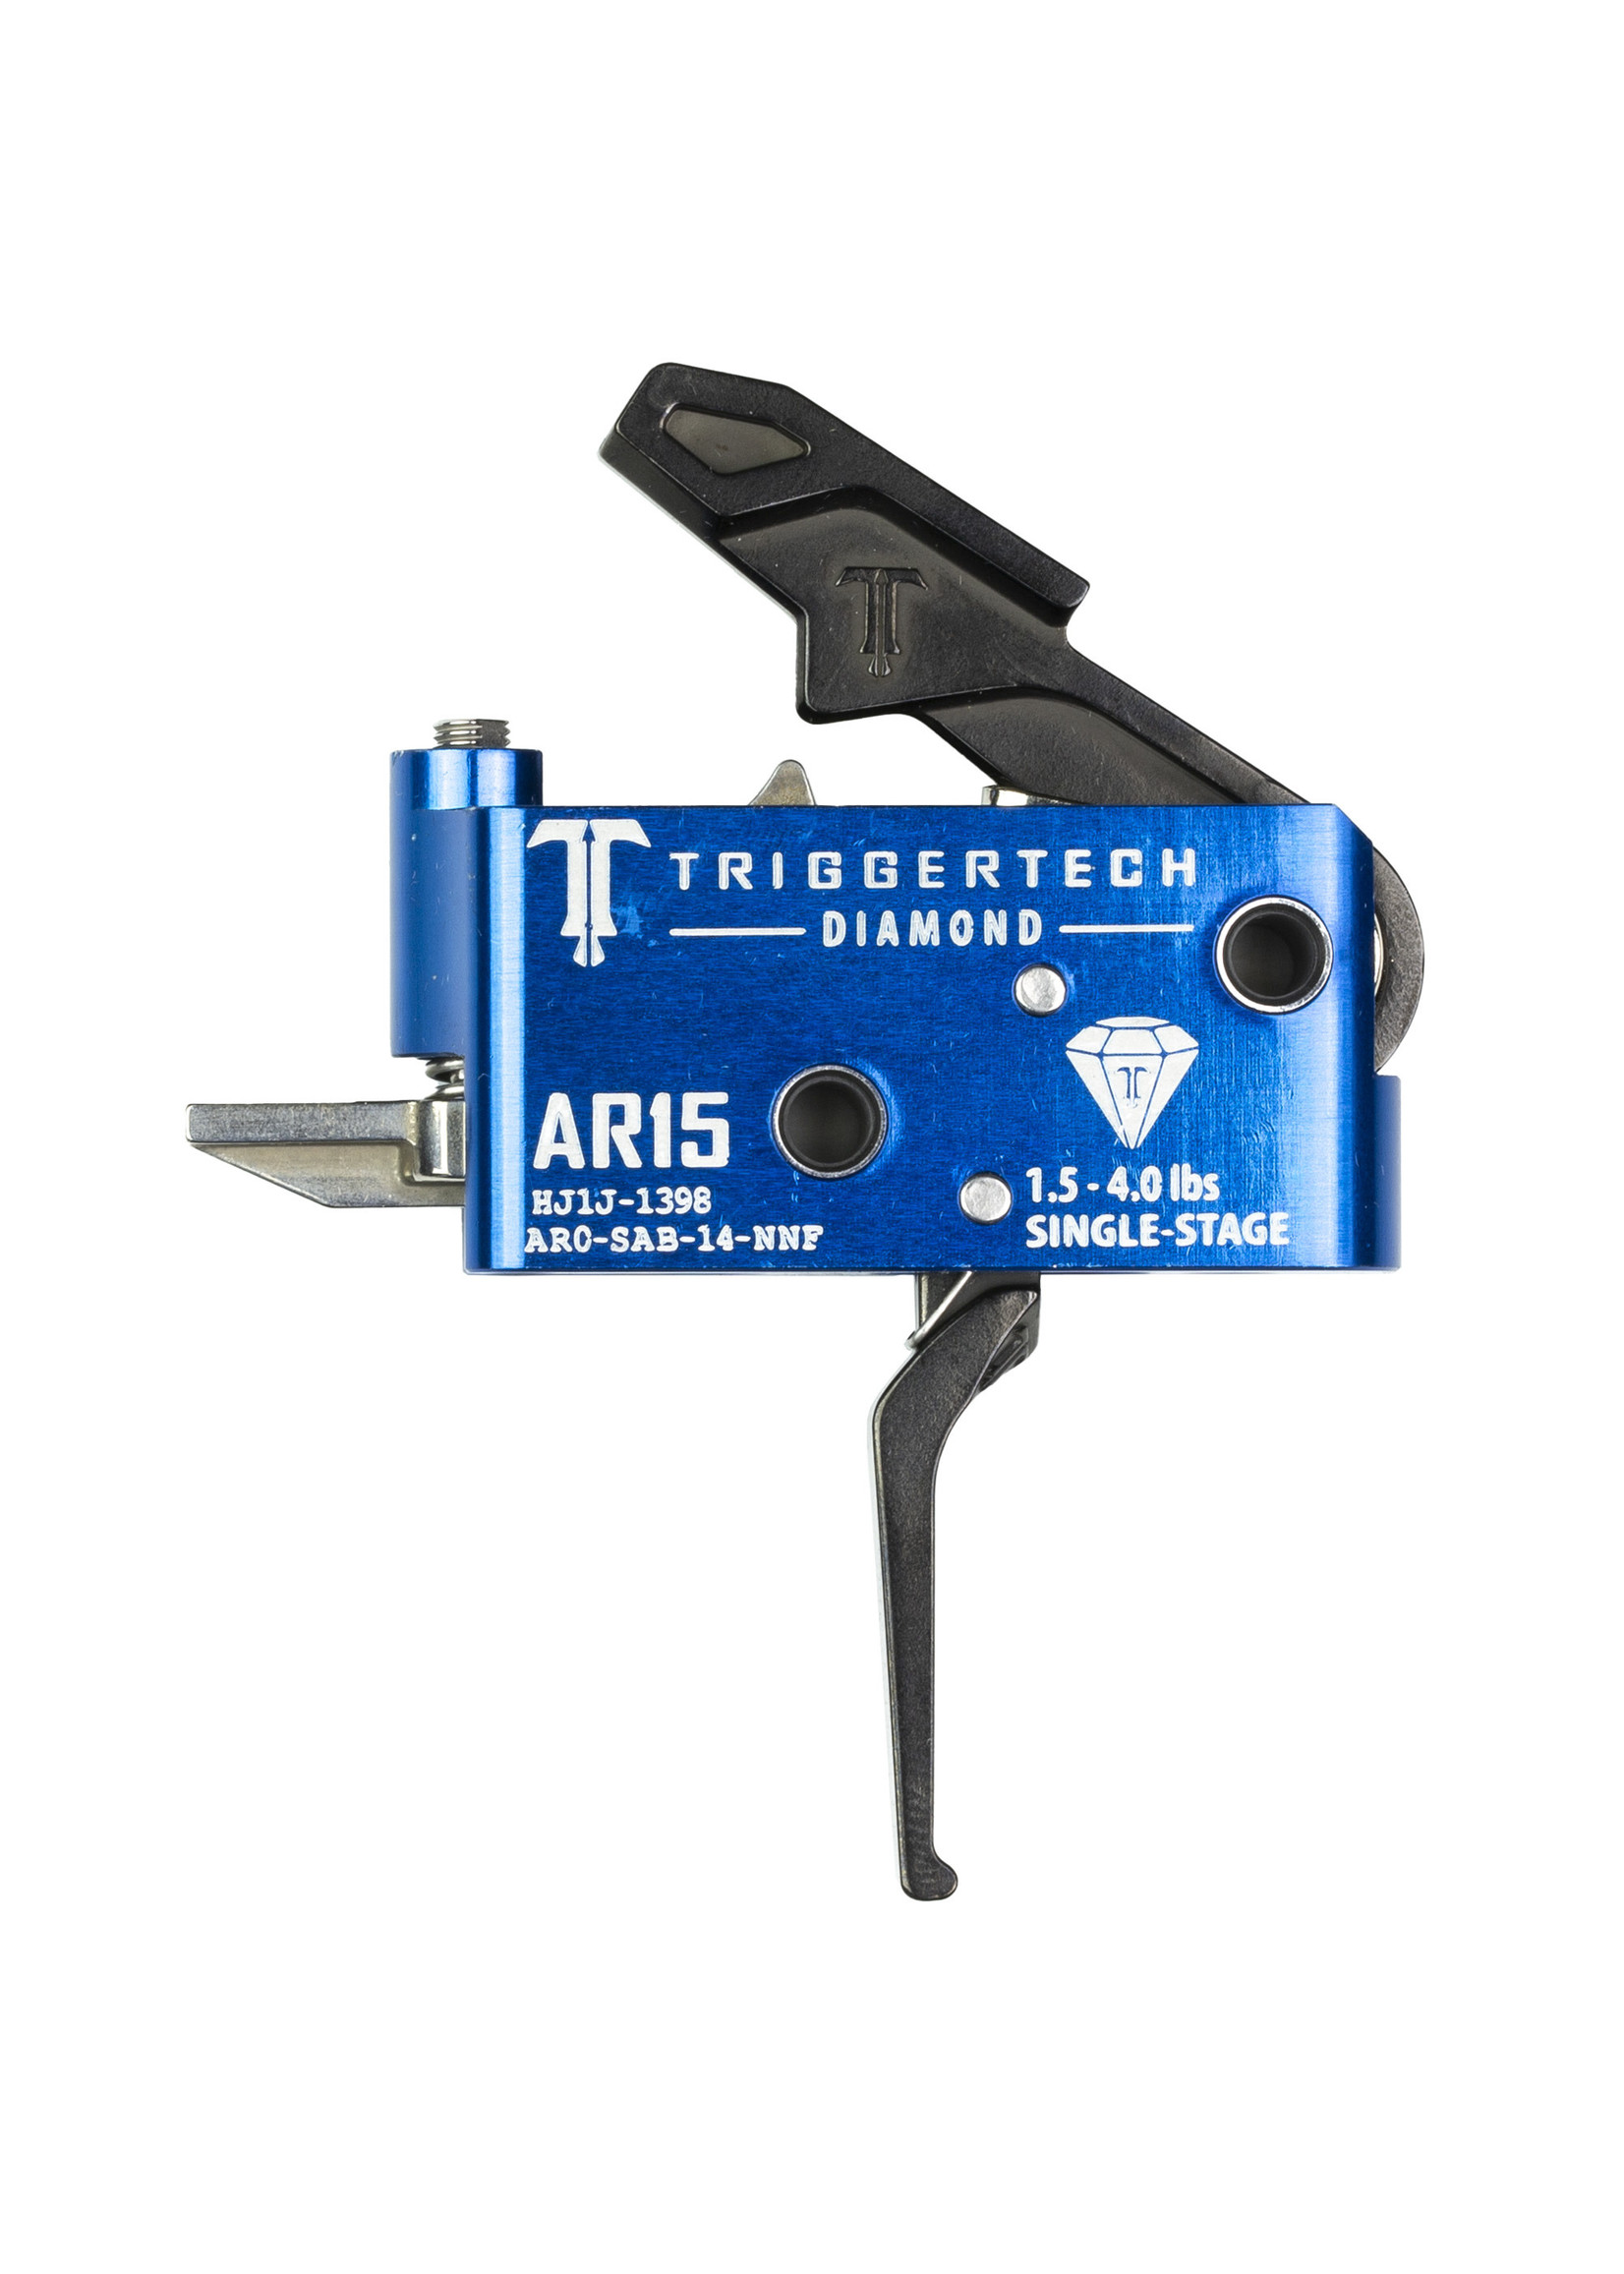 Trigger Tech TriggerTech Diamond Flat Single-Stage 1.5-4.0 lbs Adjustable for AR-15